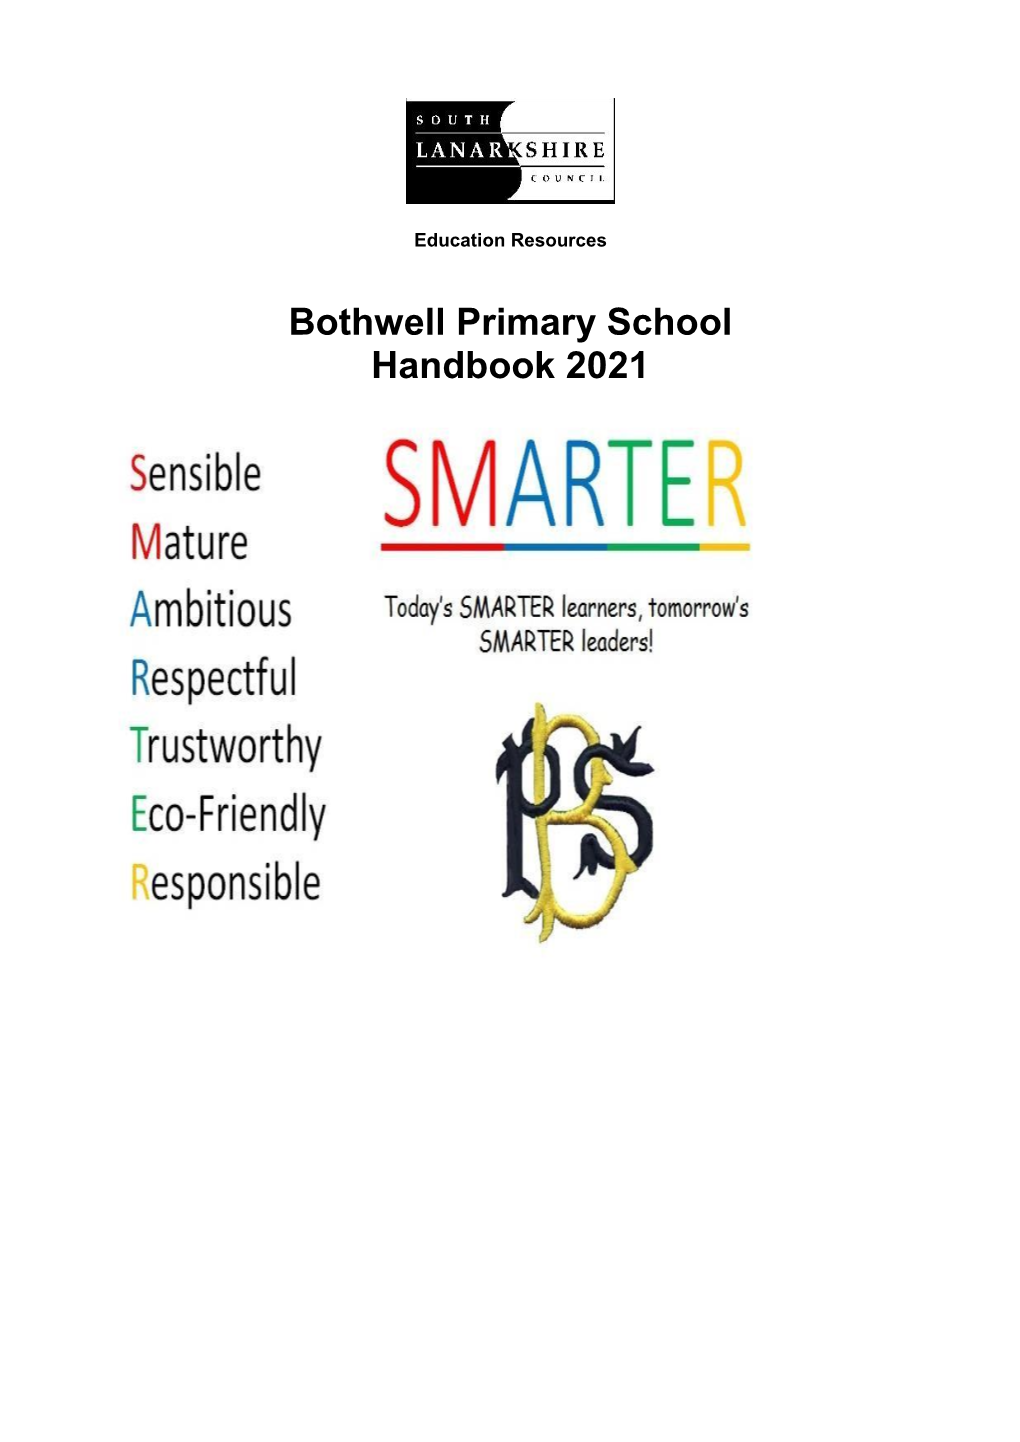 Bothwell Primary School Handbook 2021